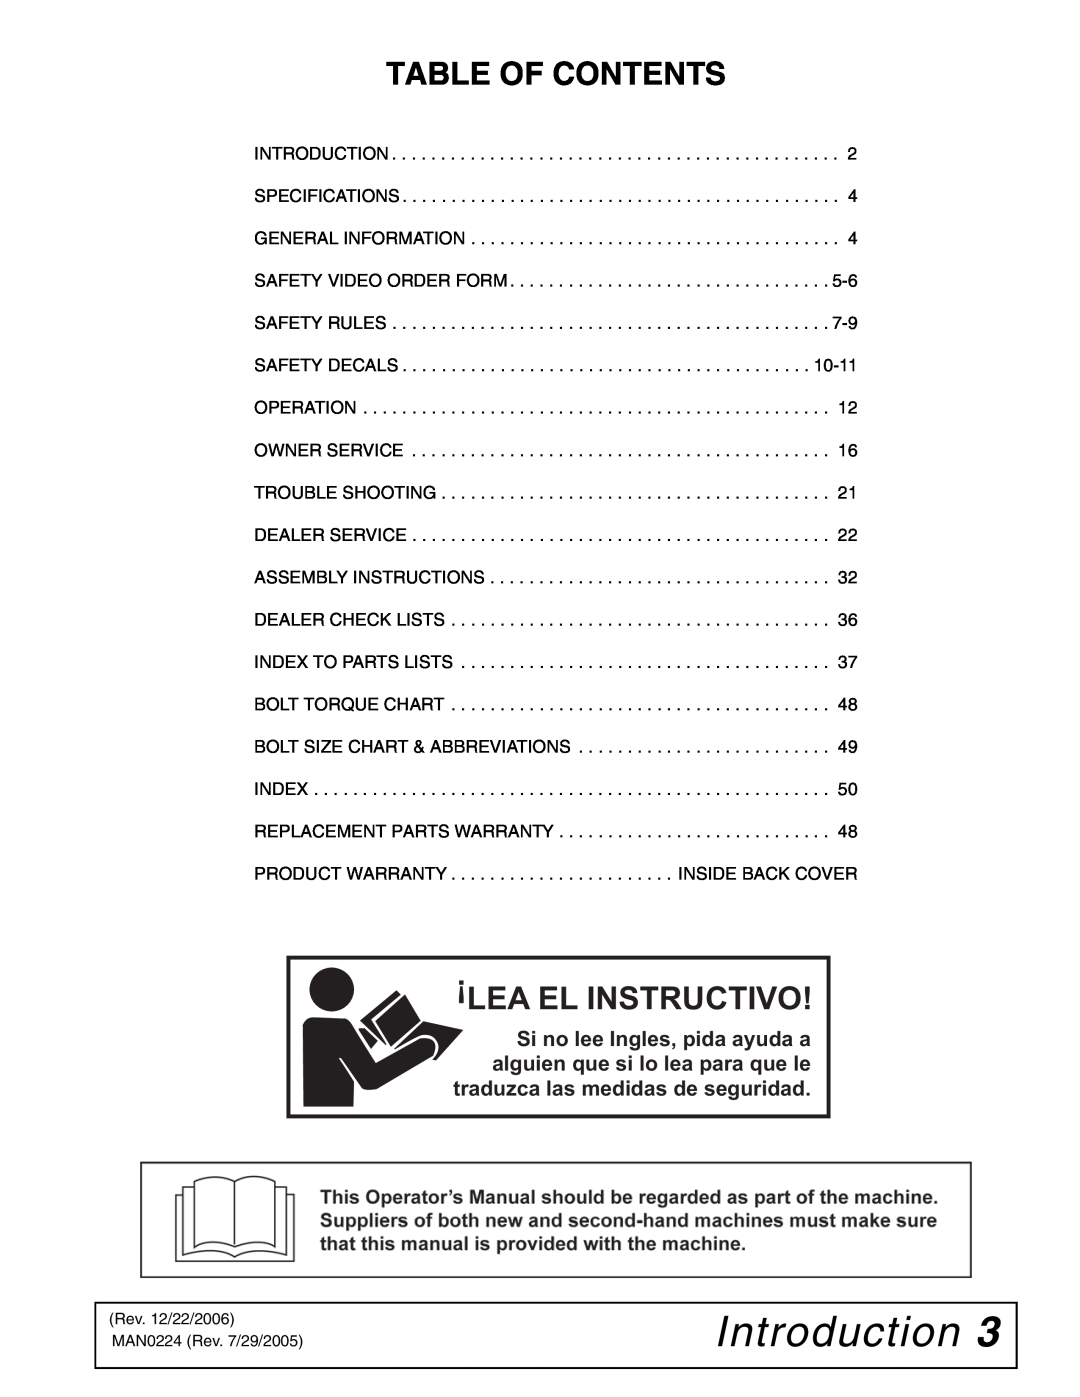 Woods Equipment RCC42 manual Introduction, Table Of Contents, Lea El Instructivo 